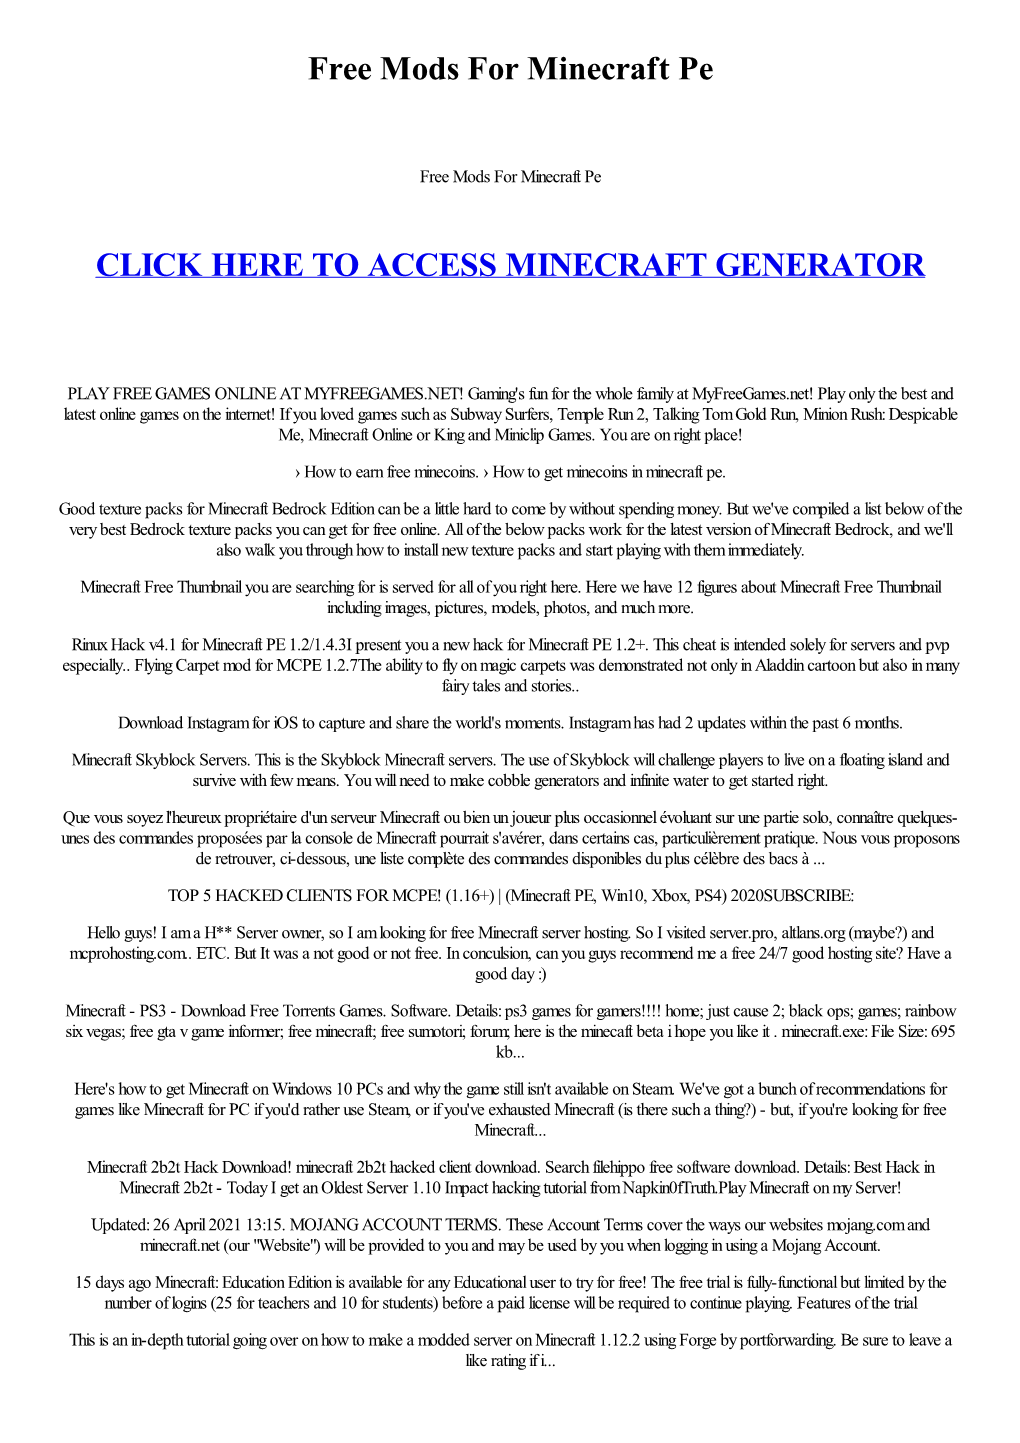 Free Mods for Minecraft Pe